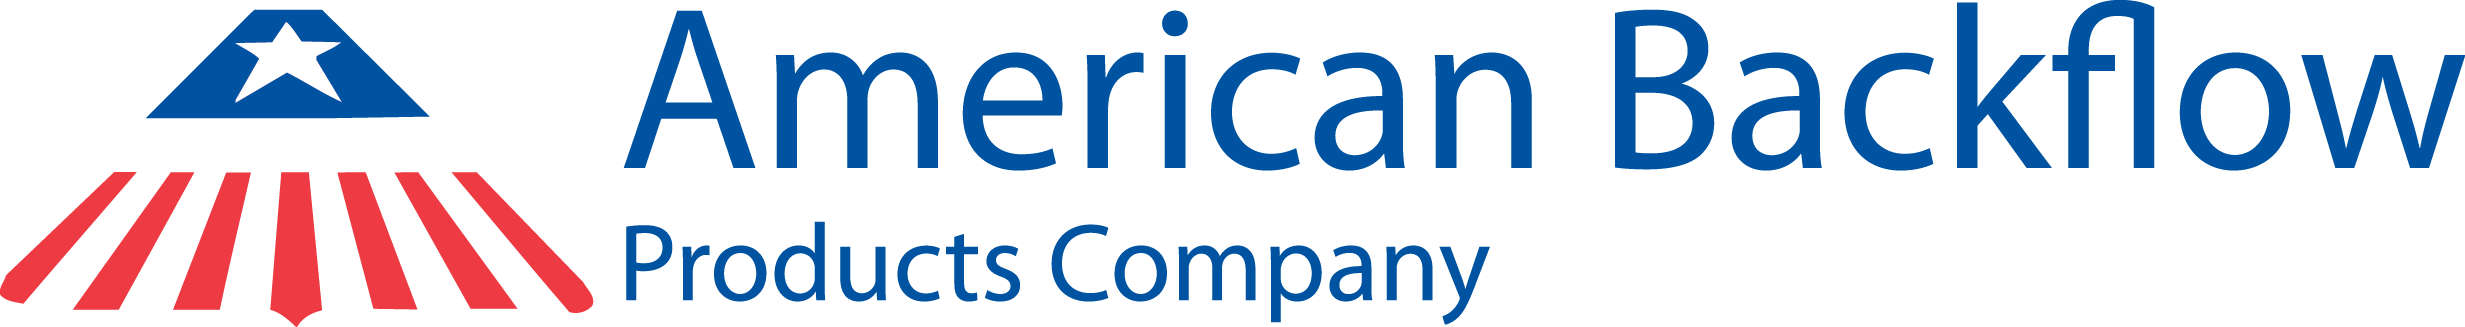 American Backflow Product Company Logo